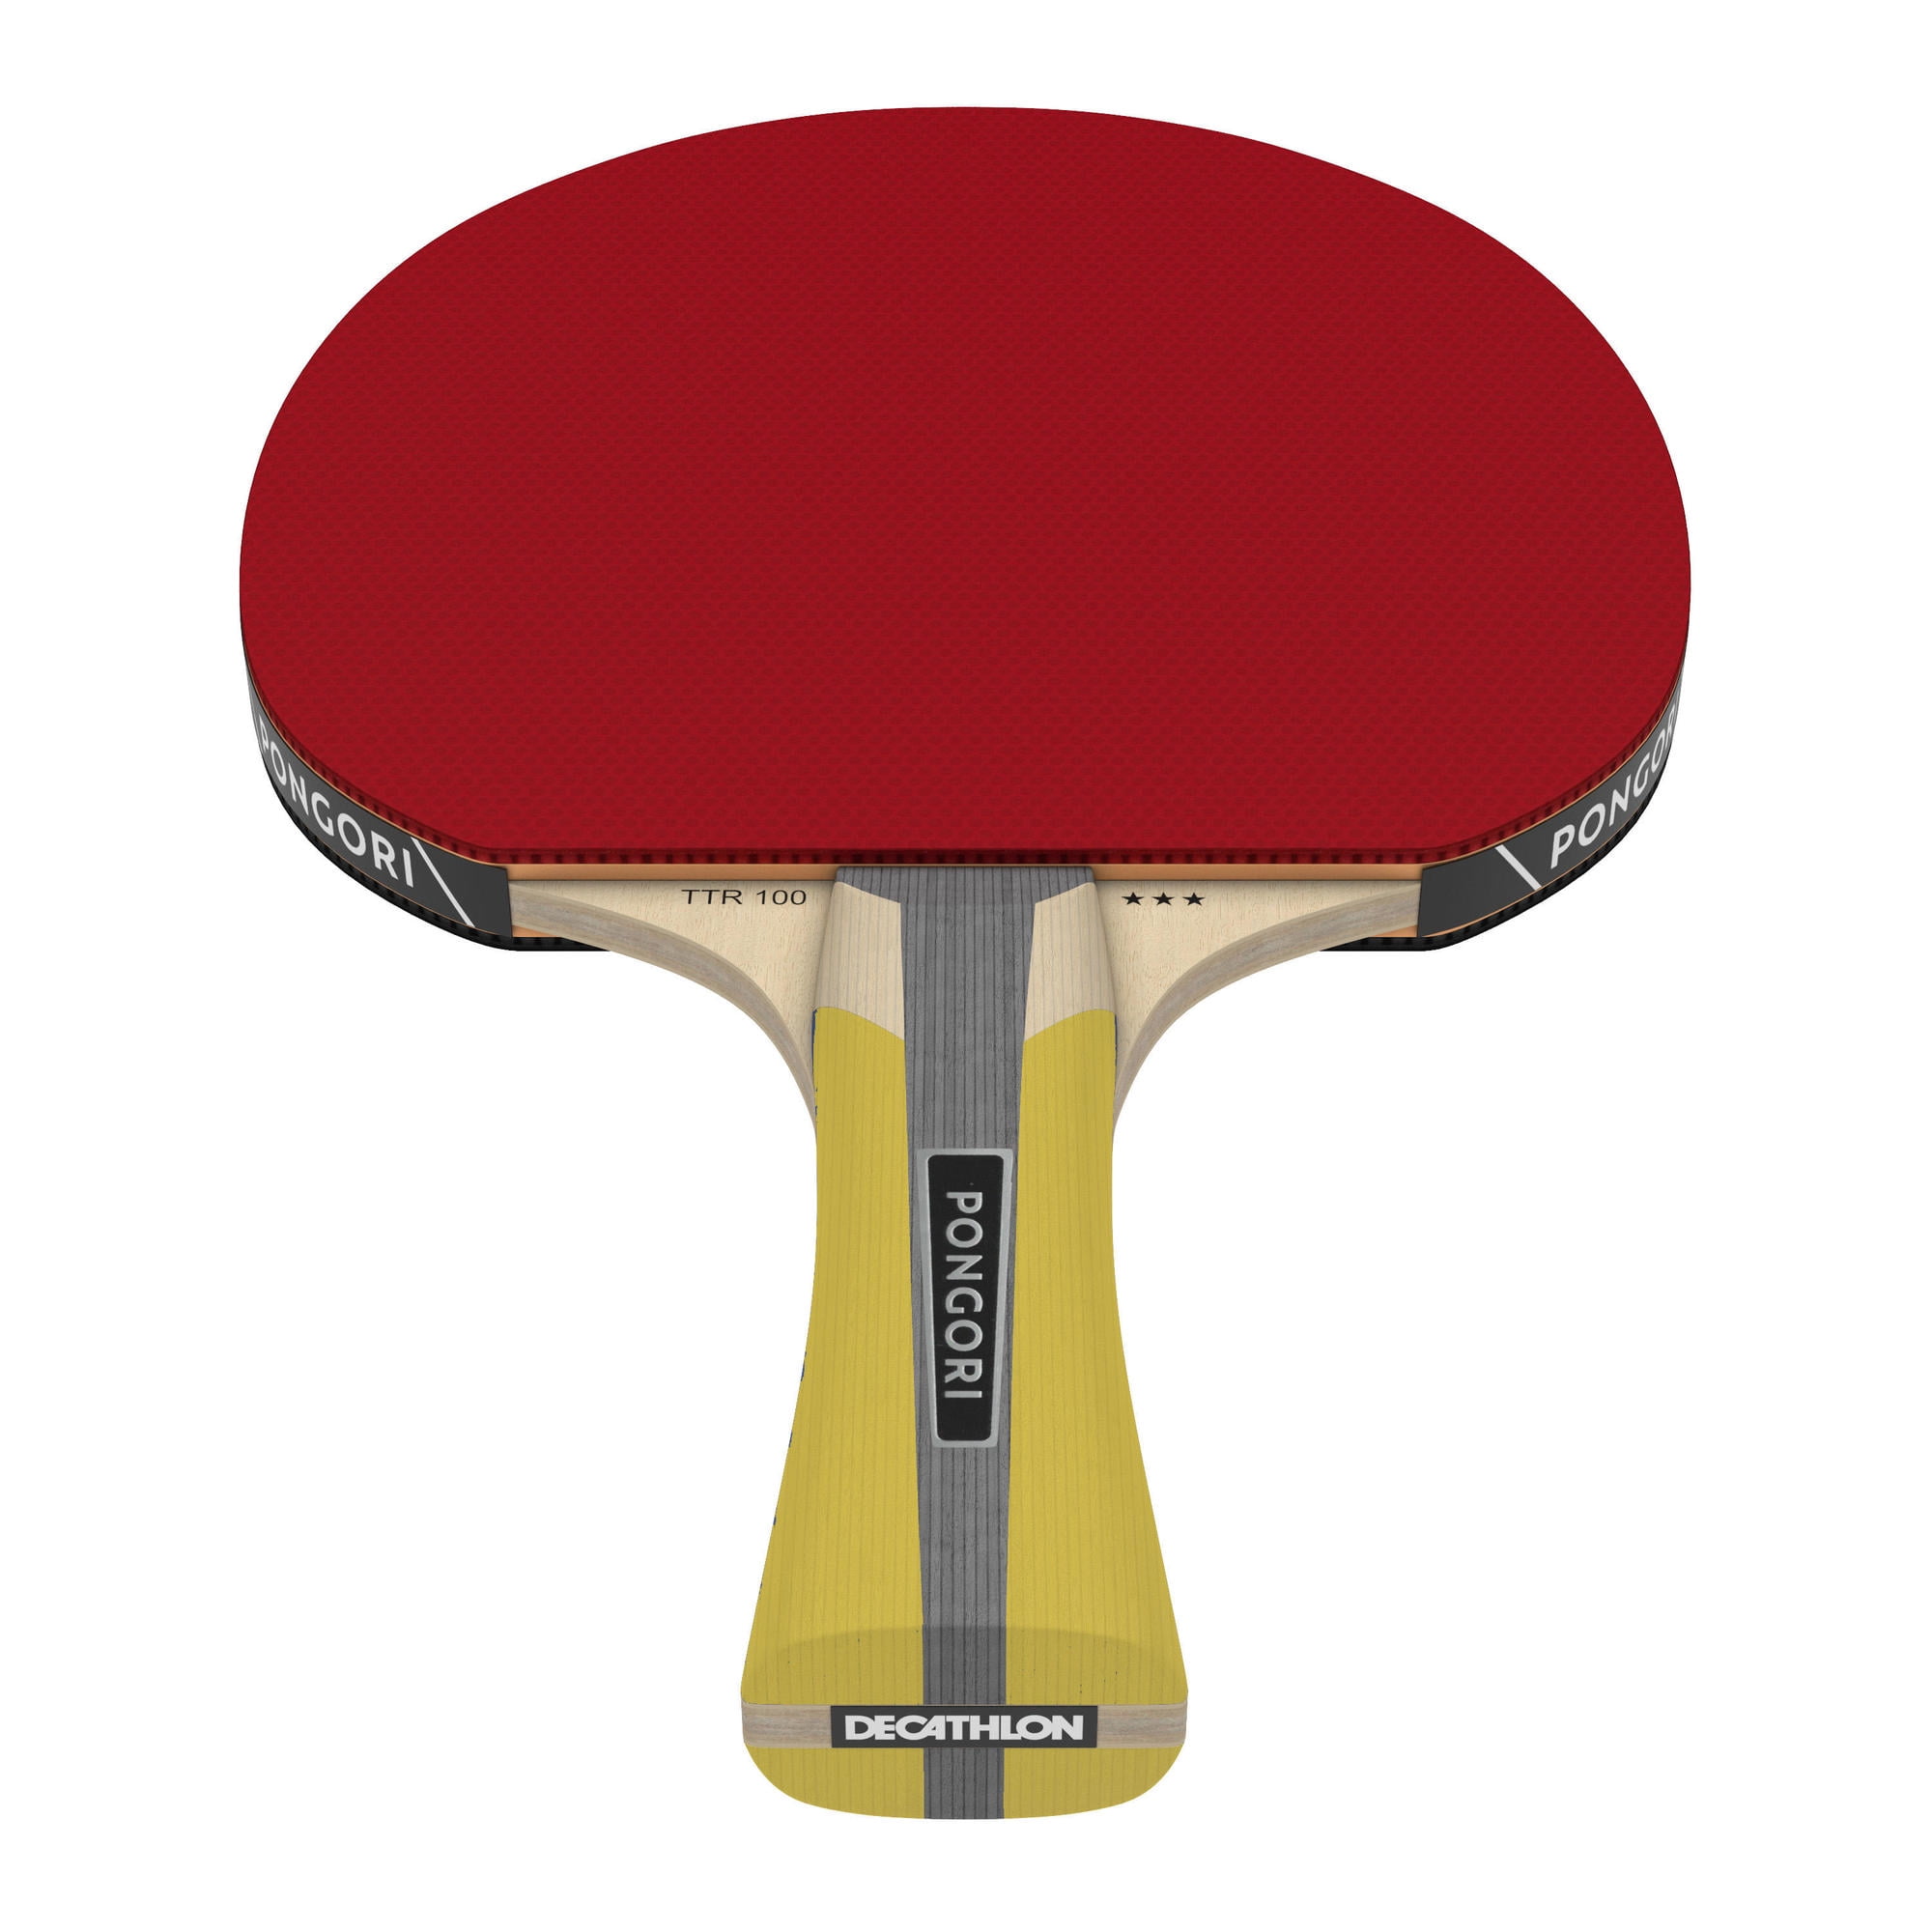 pongori table tennis bat